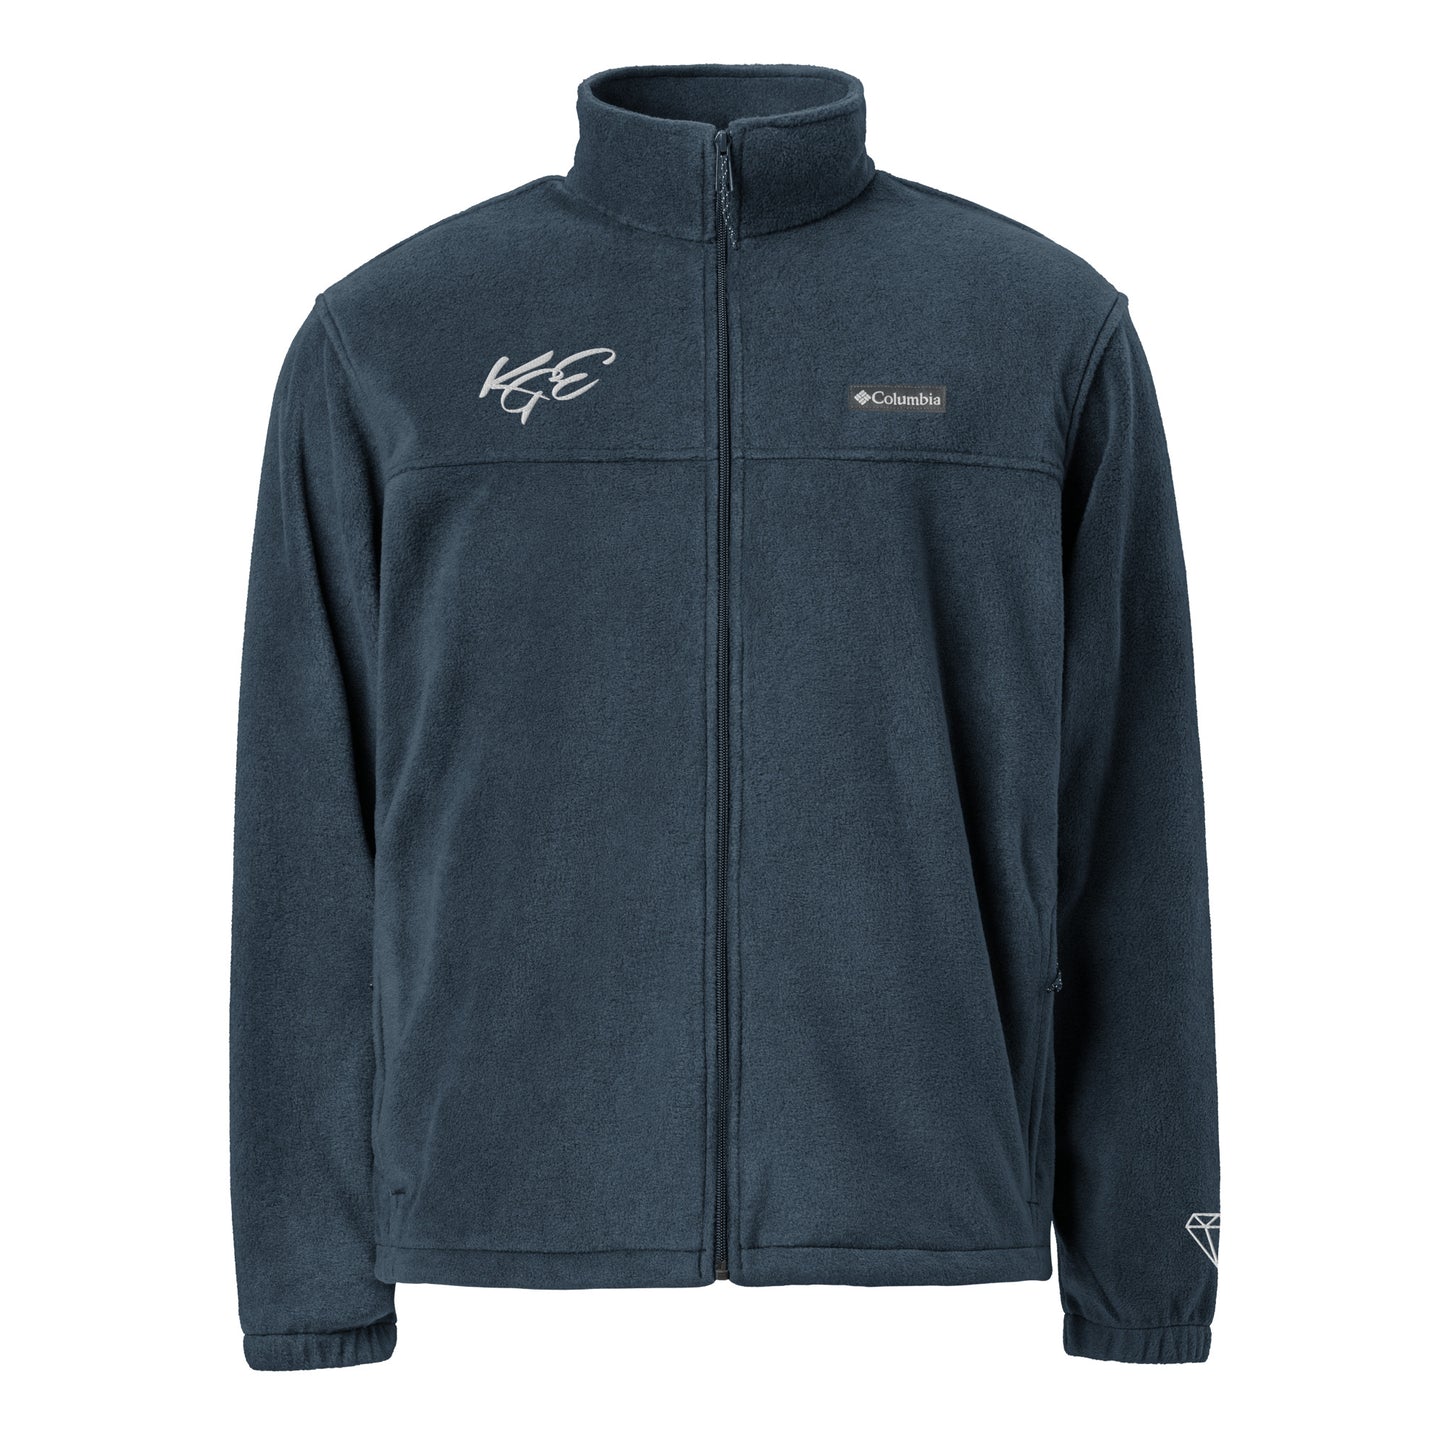 (New) KGE Signature Unisex Columbia fleece jacket (Limited Edition)